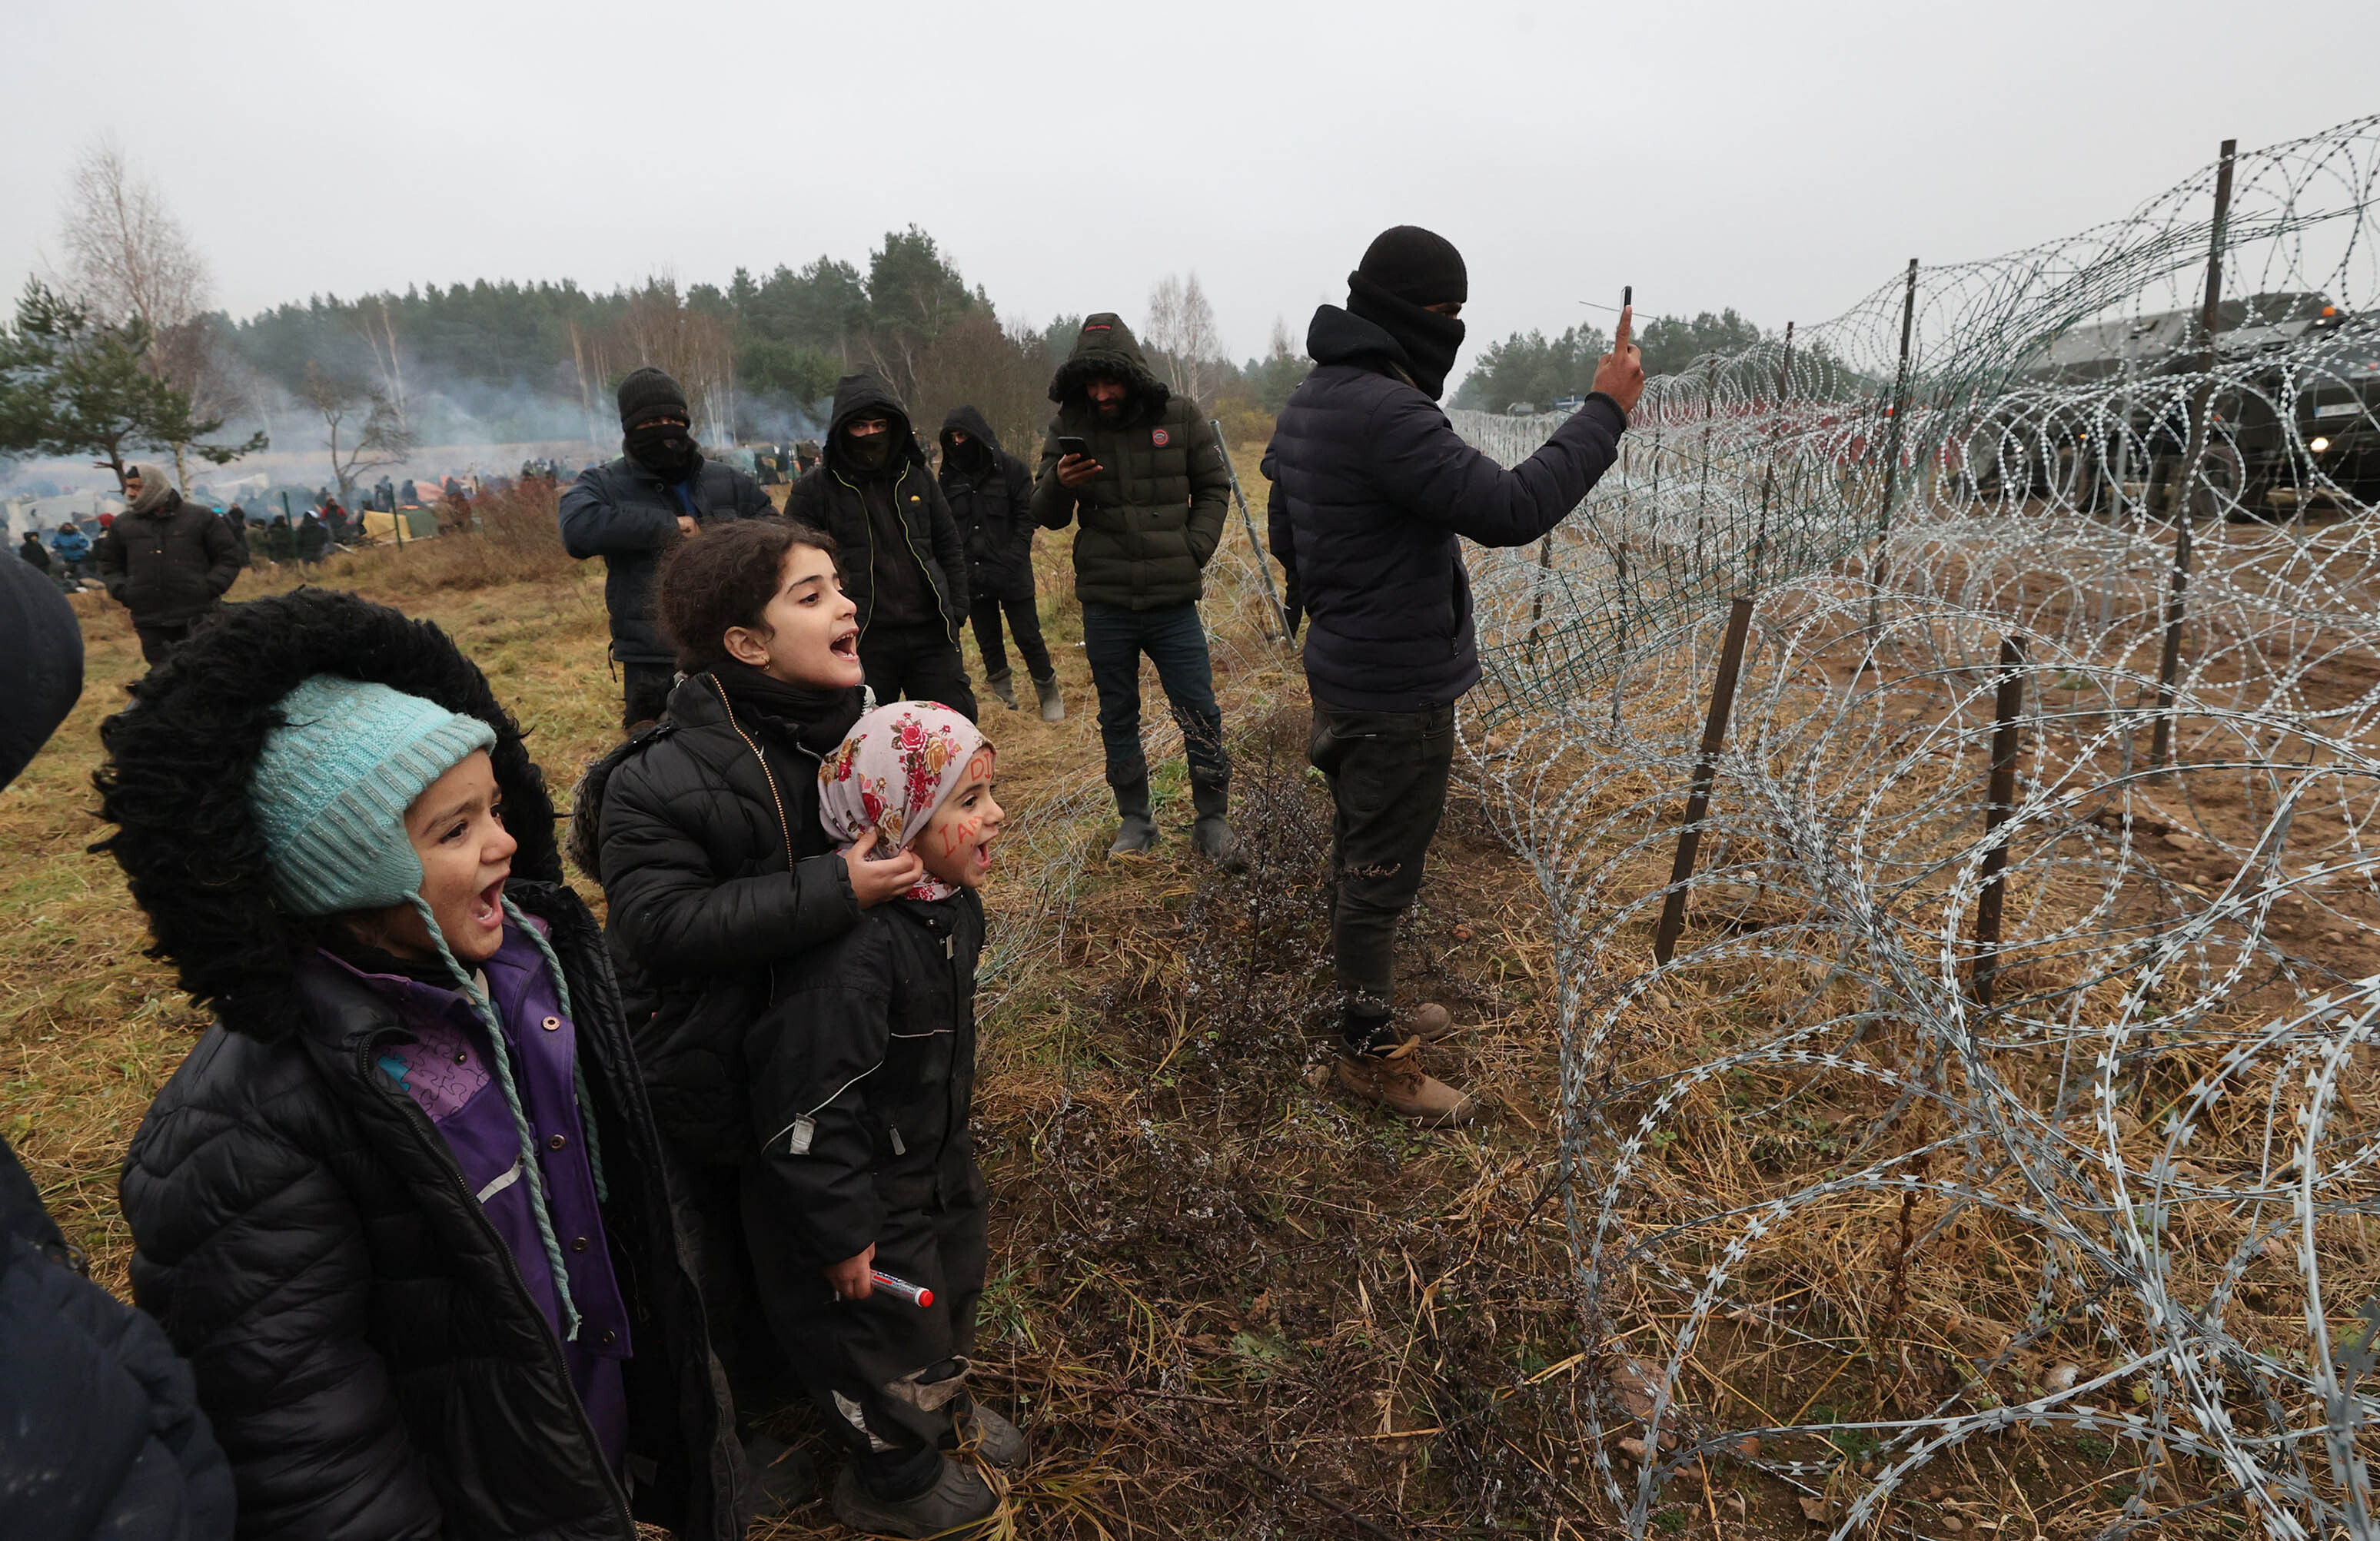 belarus poland migrants border trapped